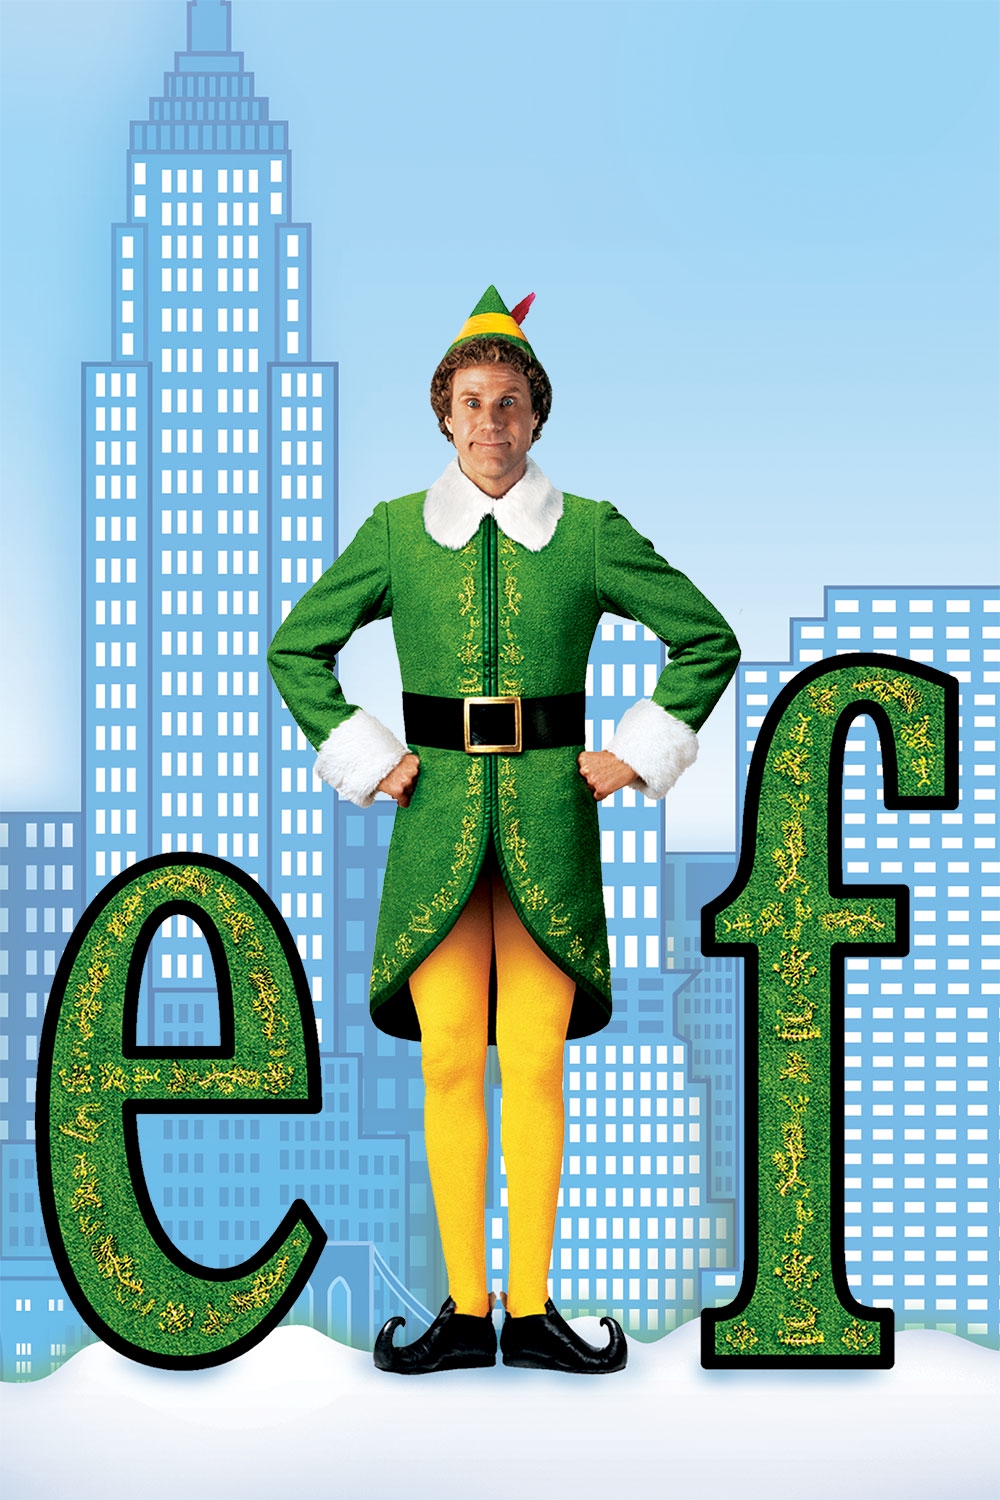 Elf (2021) full movie online free! 